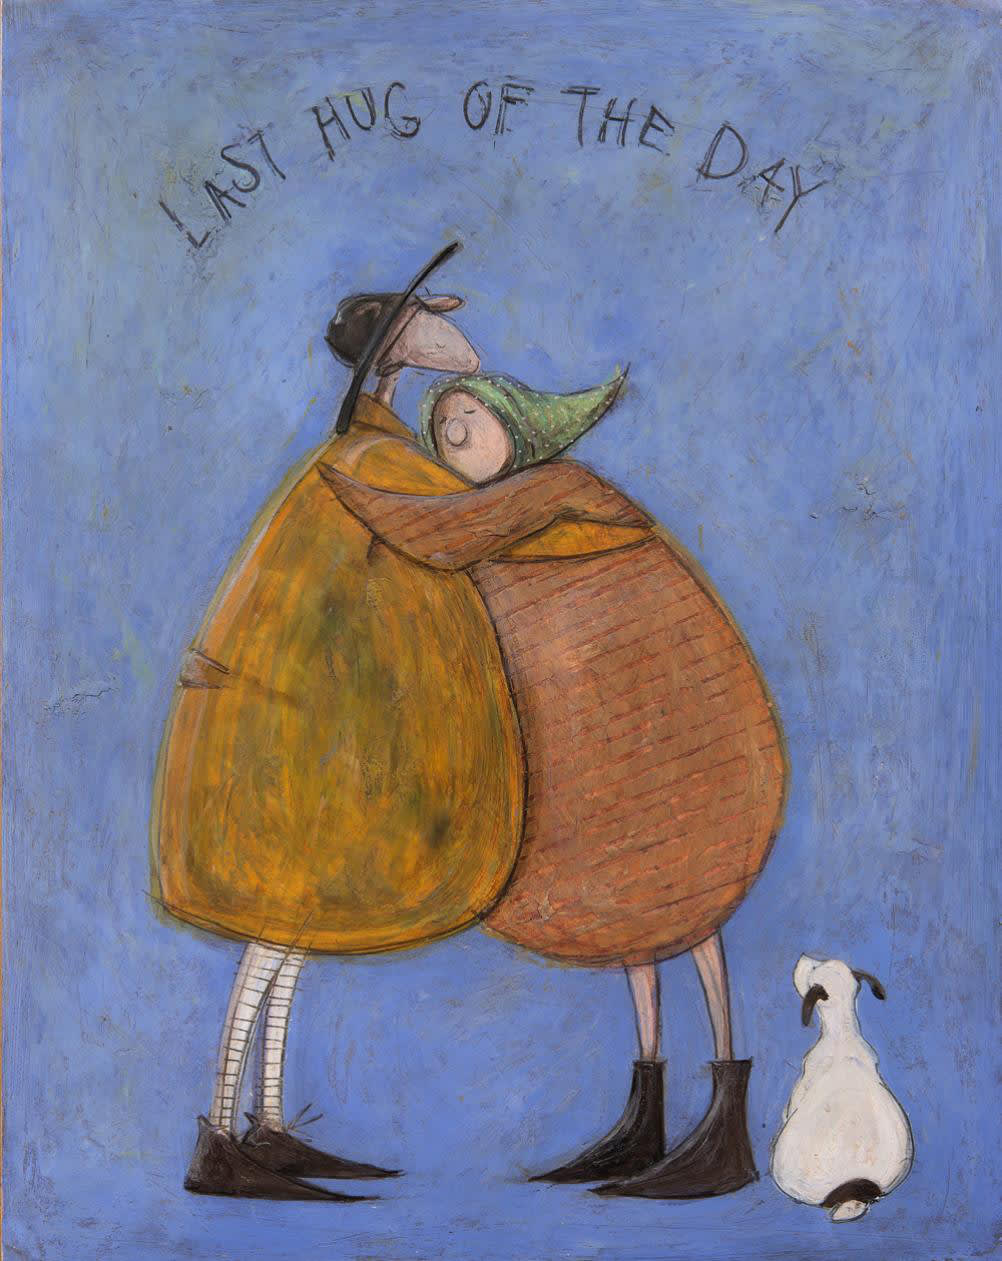 Sam Toft, Last hug of the day SOLD | John Noott Online Art Gallery